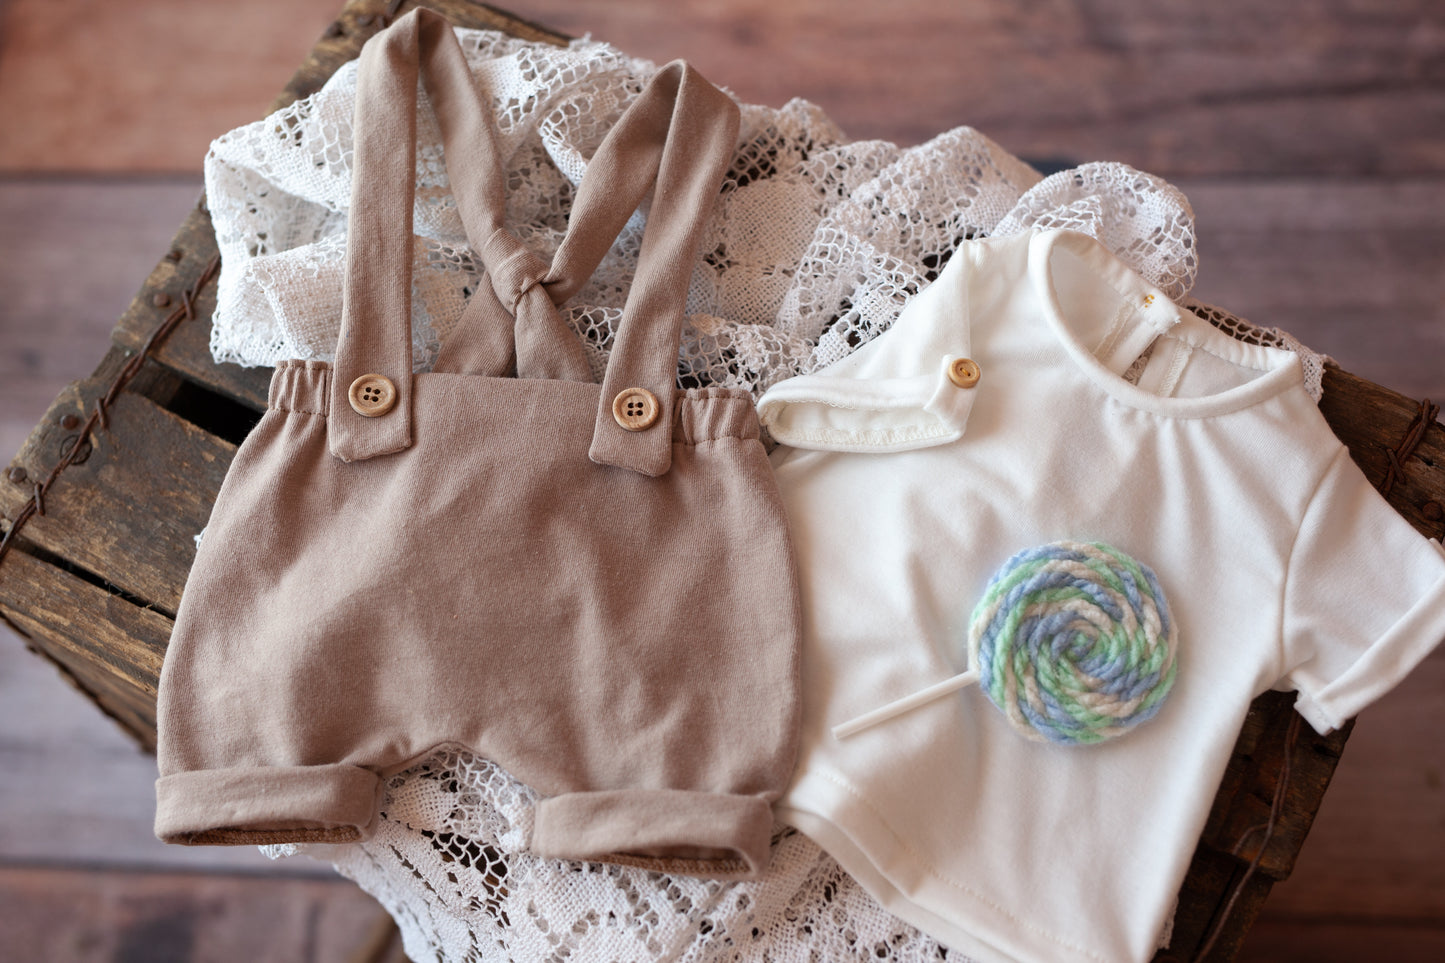 Beau - Newborn overalls and shirt